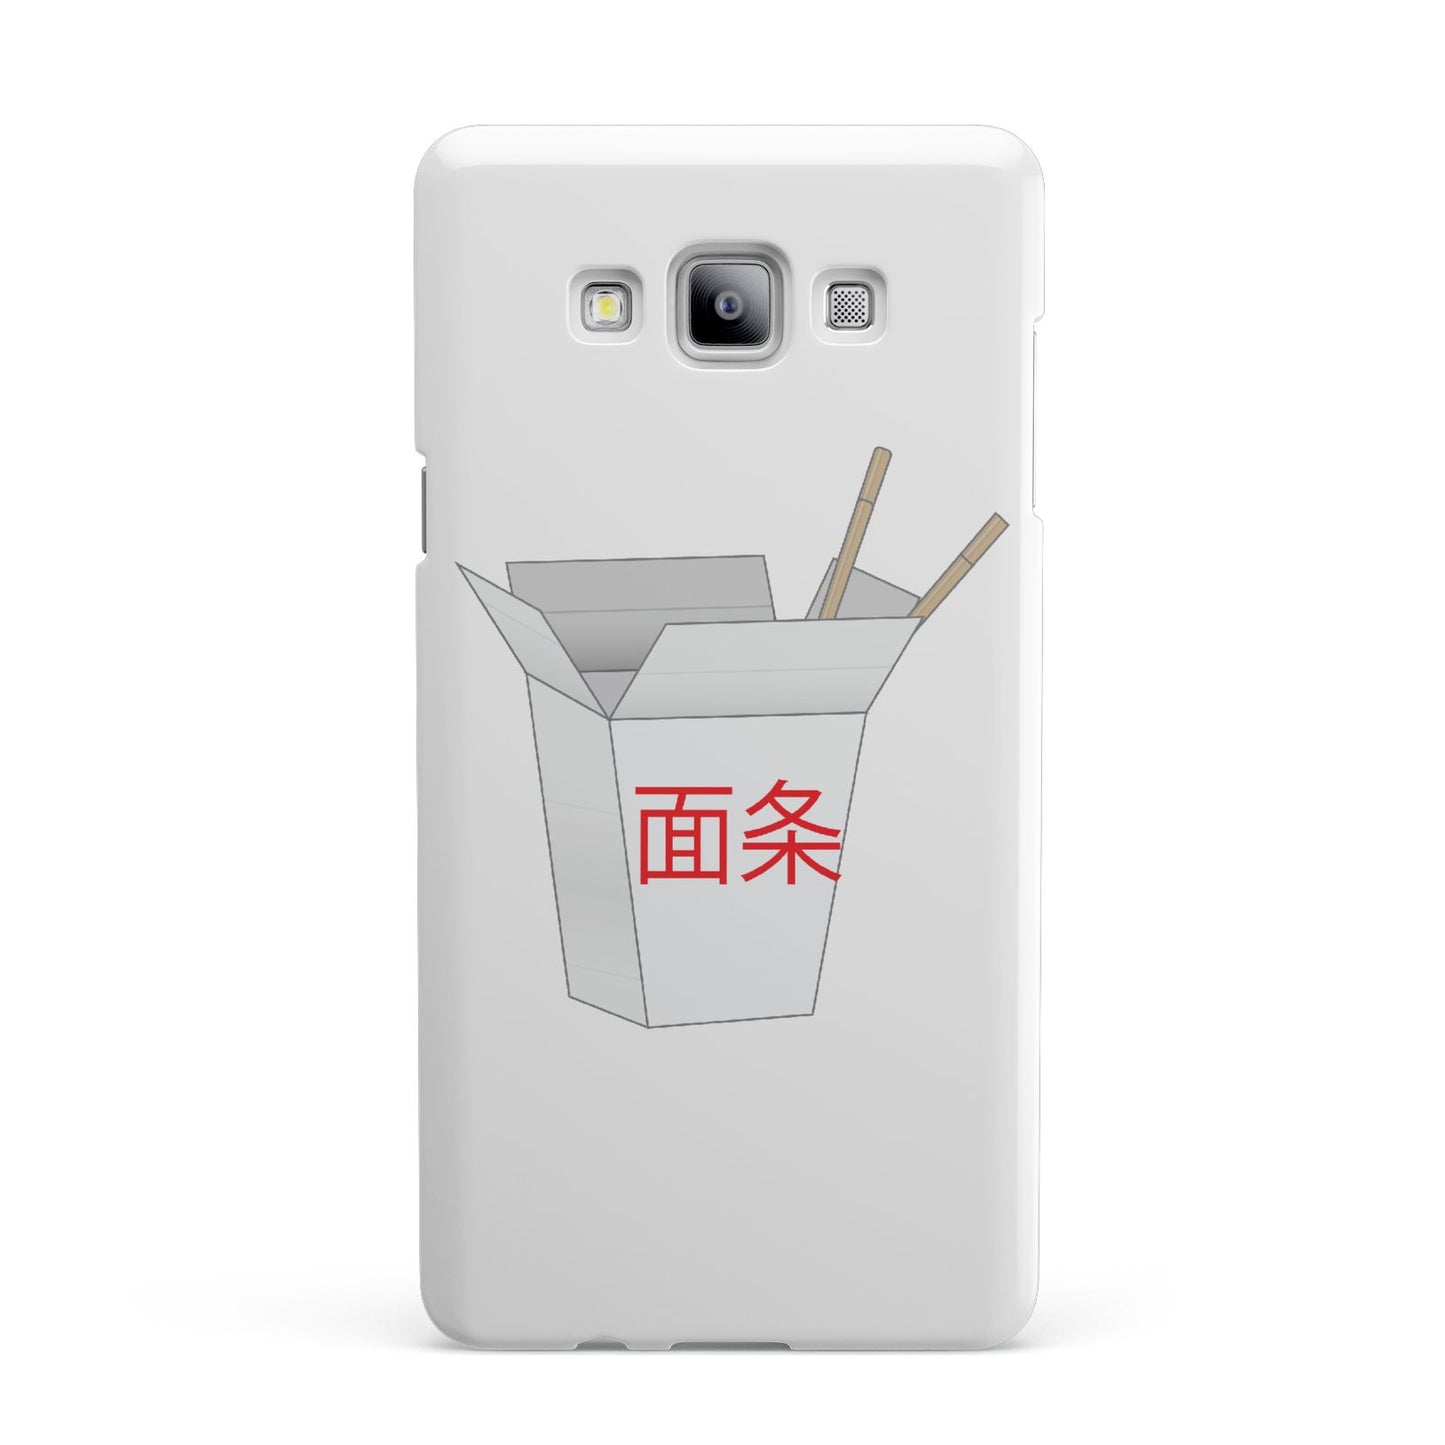 Chinese Takeaway Box Samsung Galaxy A7 2015 Case